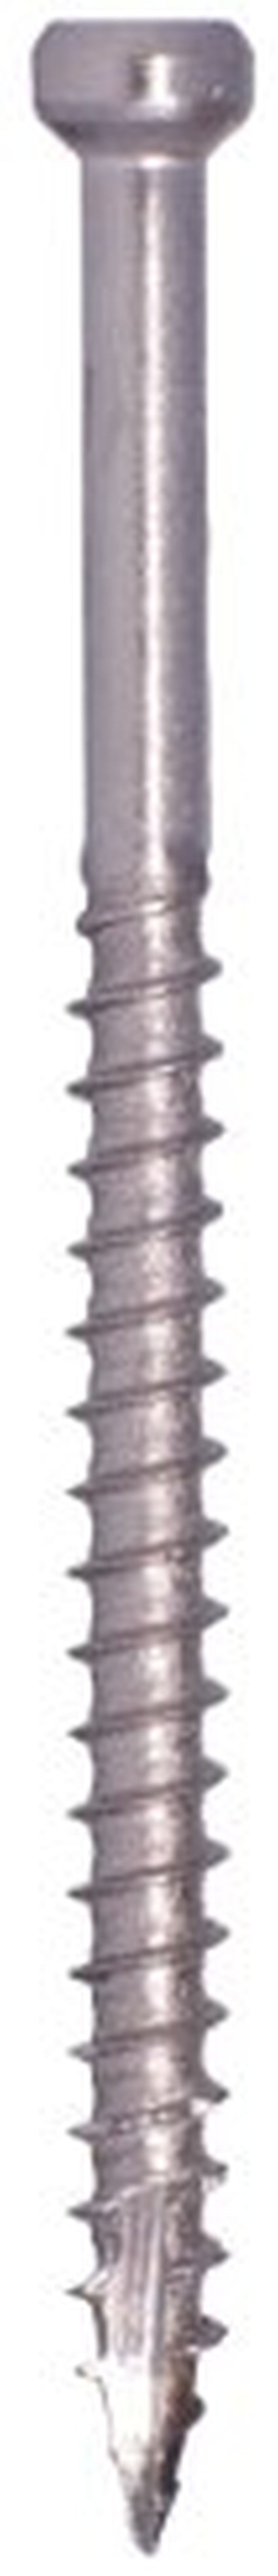 GRK Screws 37724 #8x1-1/2 Star Drive Trim Head 305 Stainless Steel FIN/Trim Screws, 100/Box